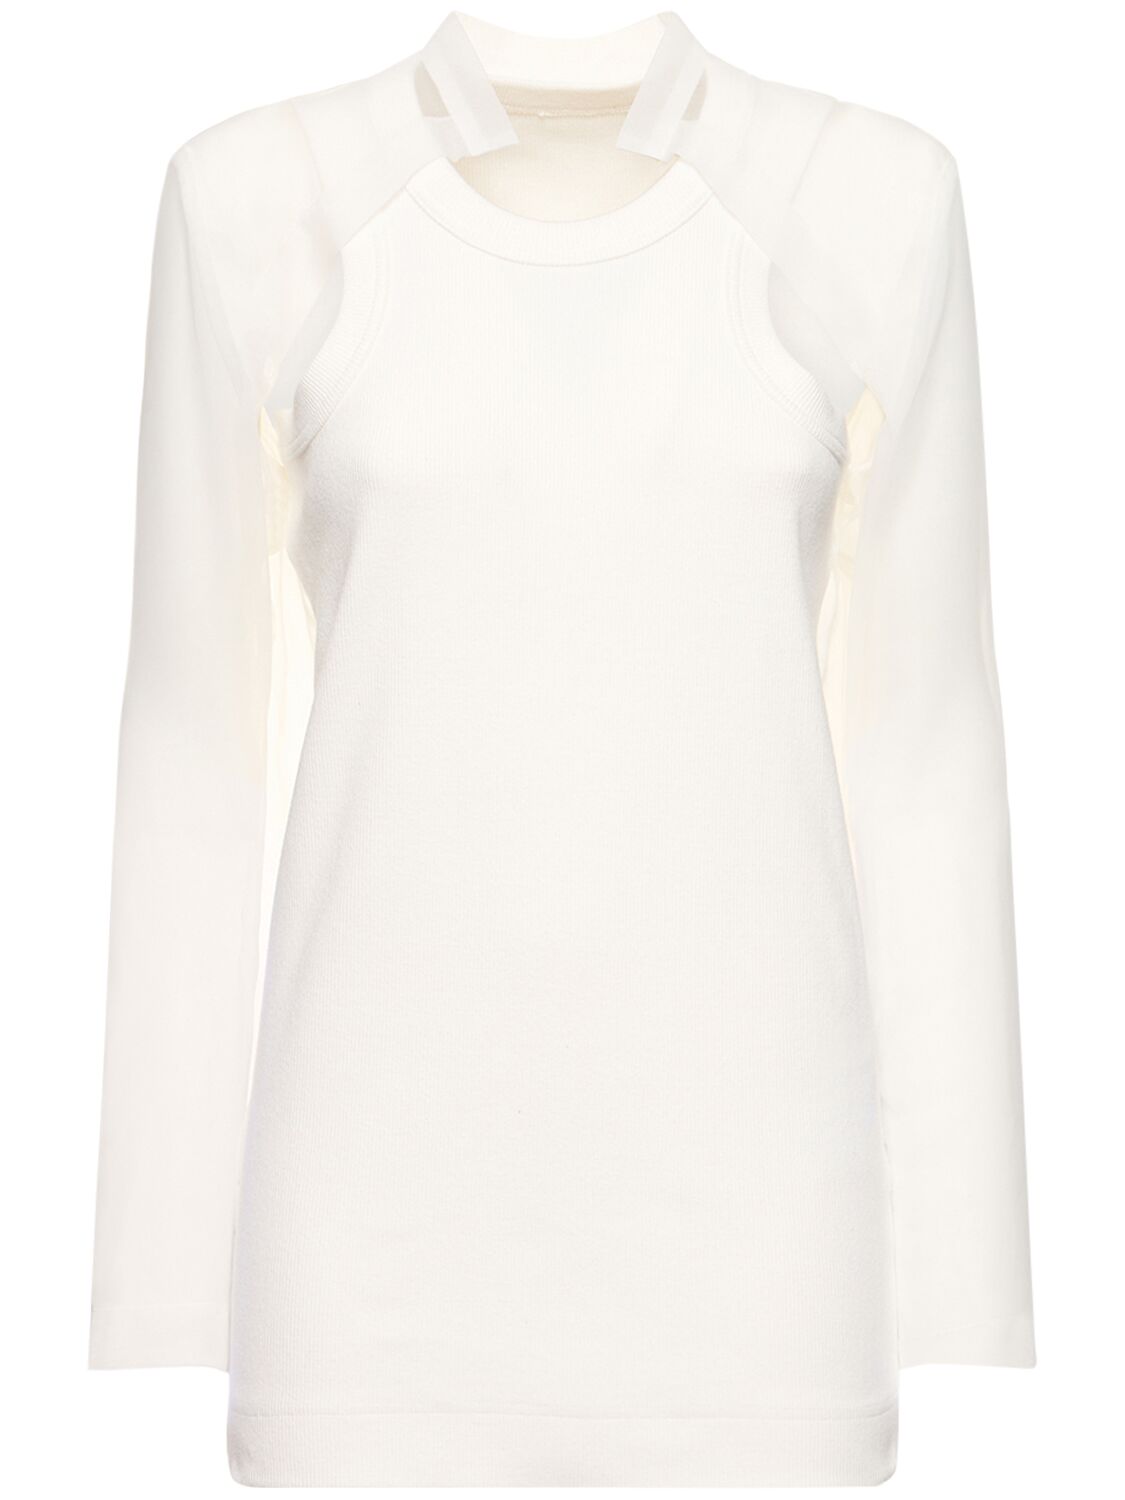 Sacai Ribbed Cotton Jersey & Chiffon Top In White